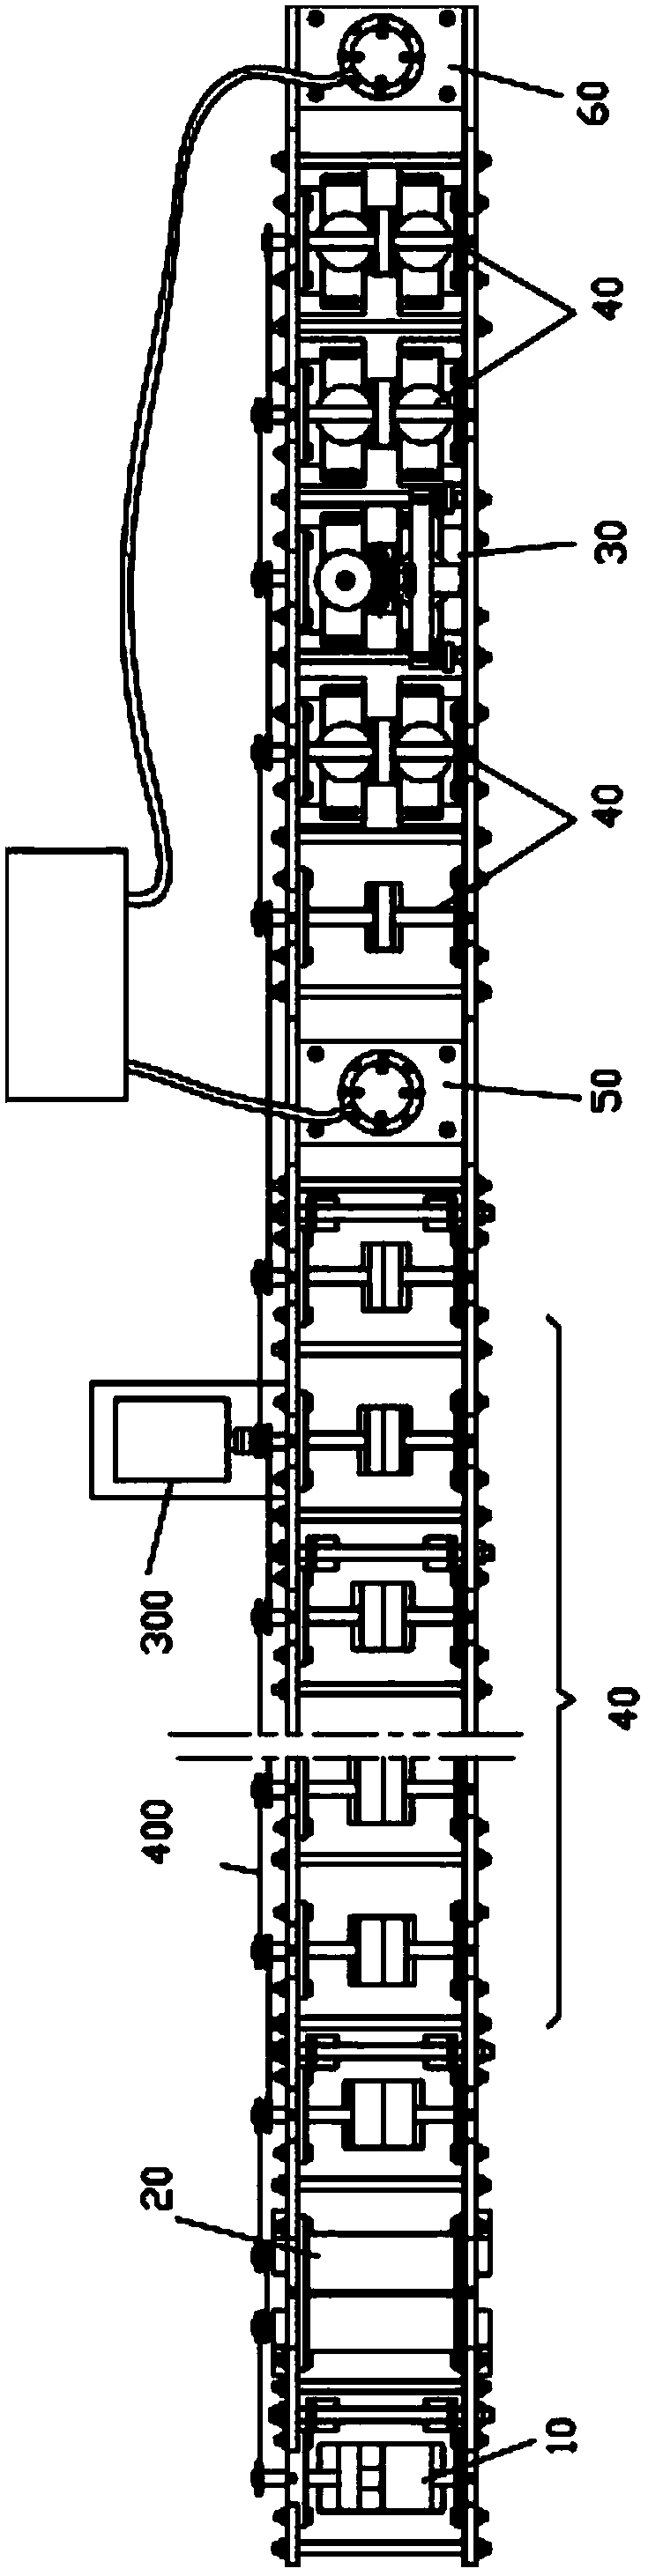 Air inlet frame forming machine of tank type ventilator